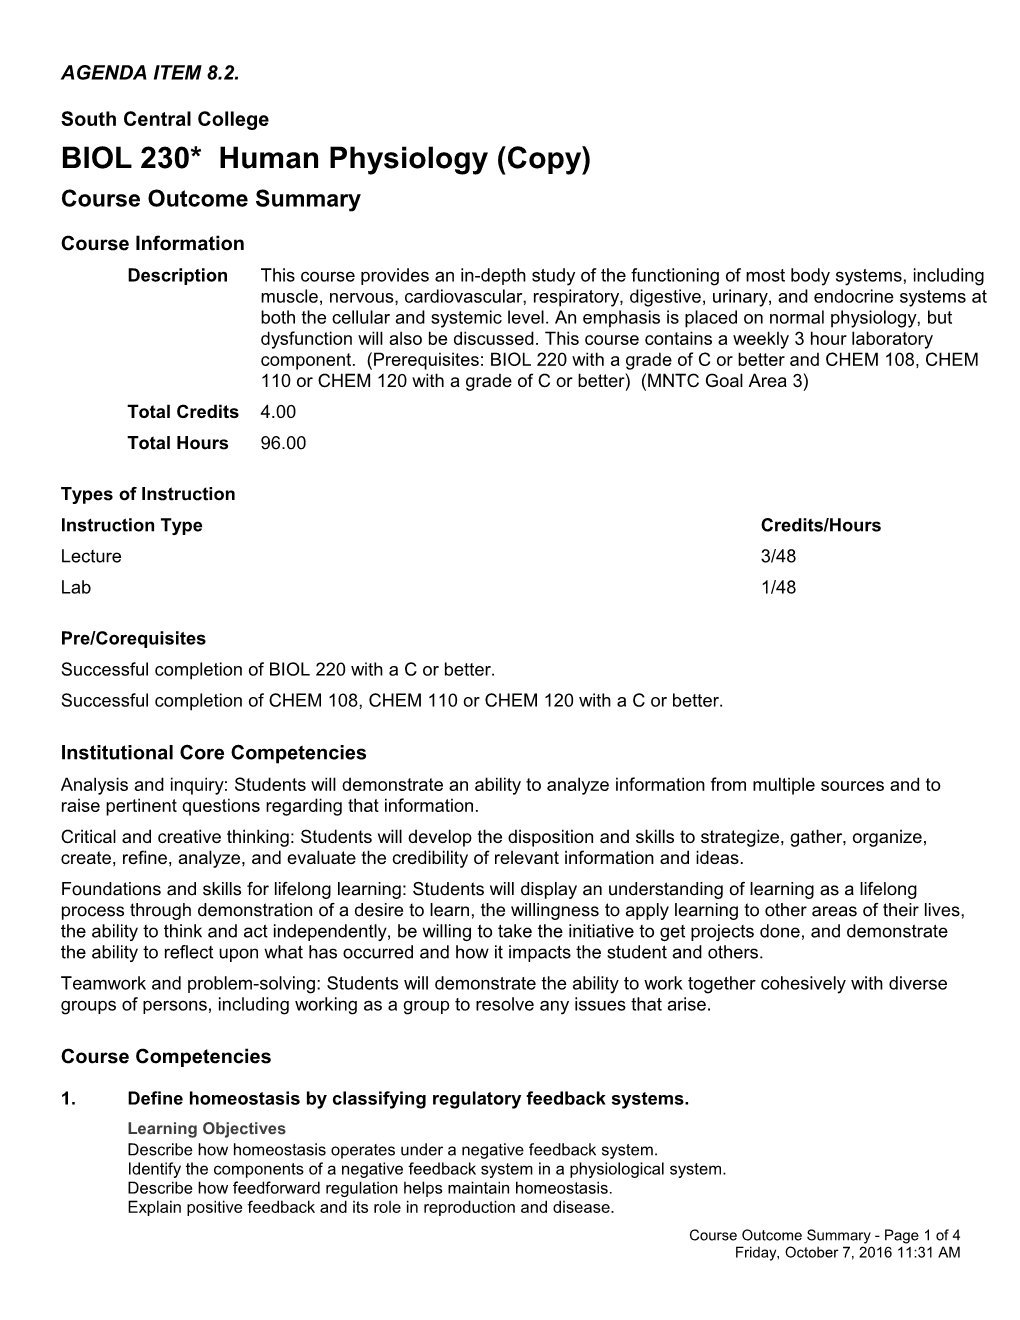 BIOL 230* Human Physiology (Copy)